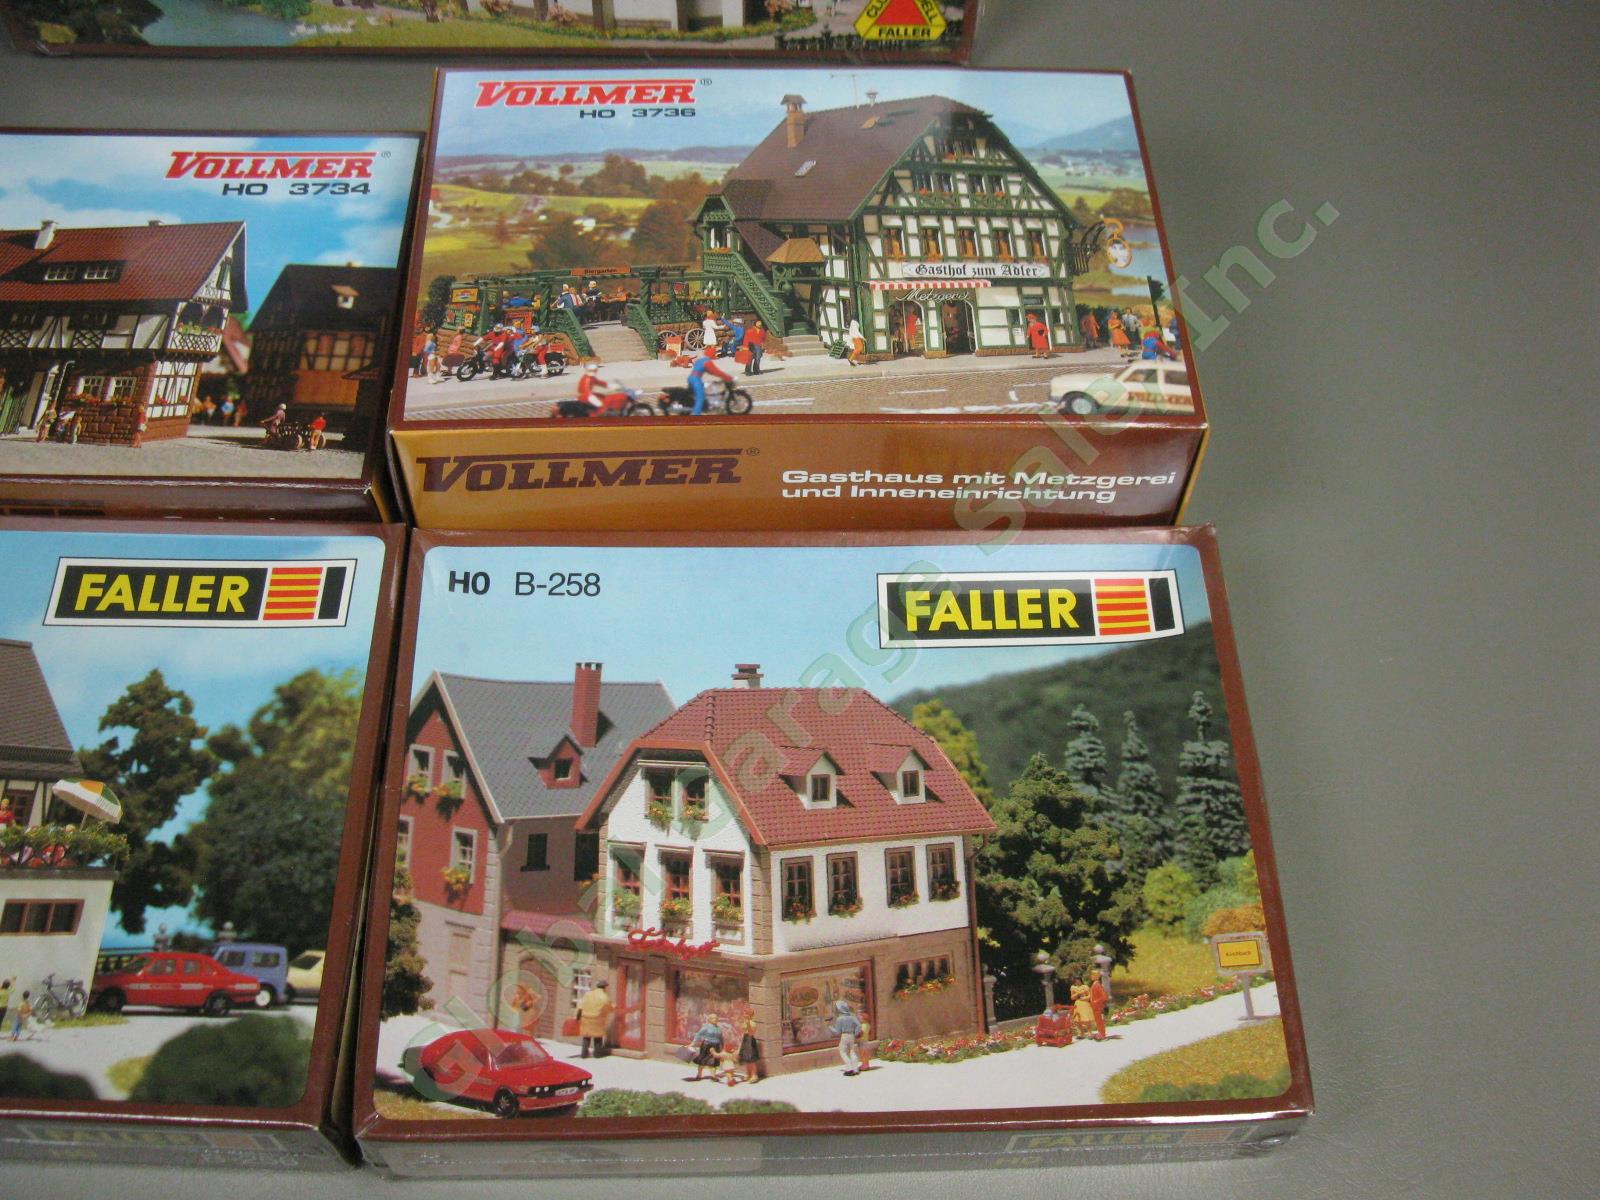 5 NEW Faller Vollmer HO Model Train Building Kit Set Lot 3734 3736 B-256 258 351 2